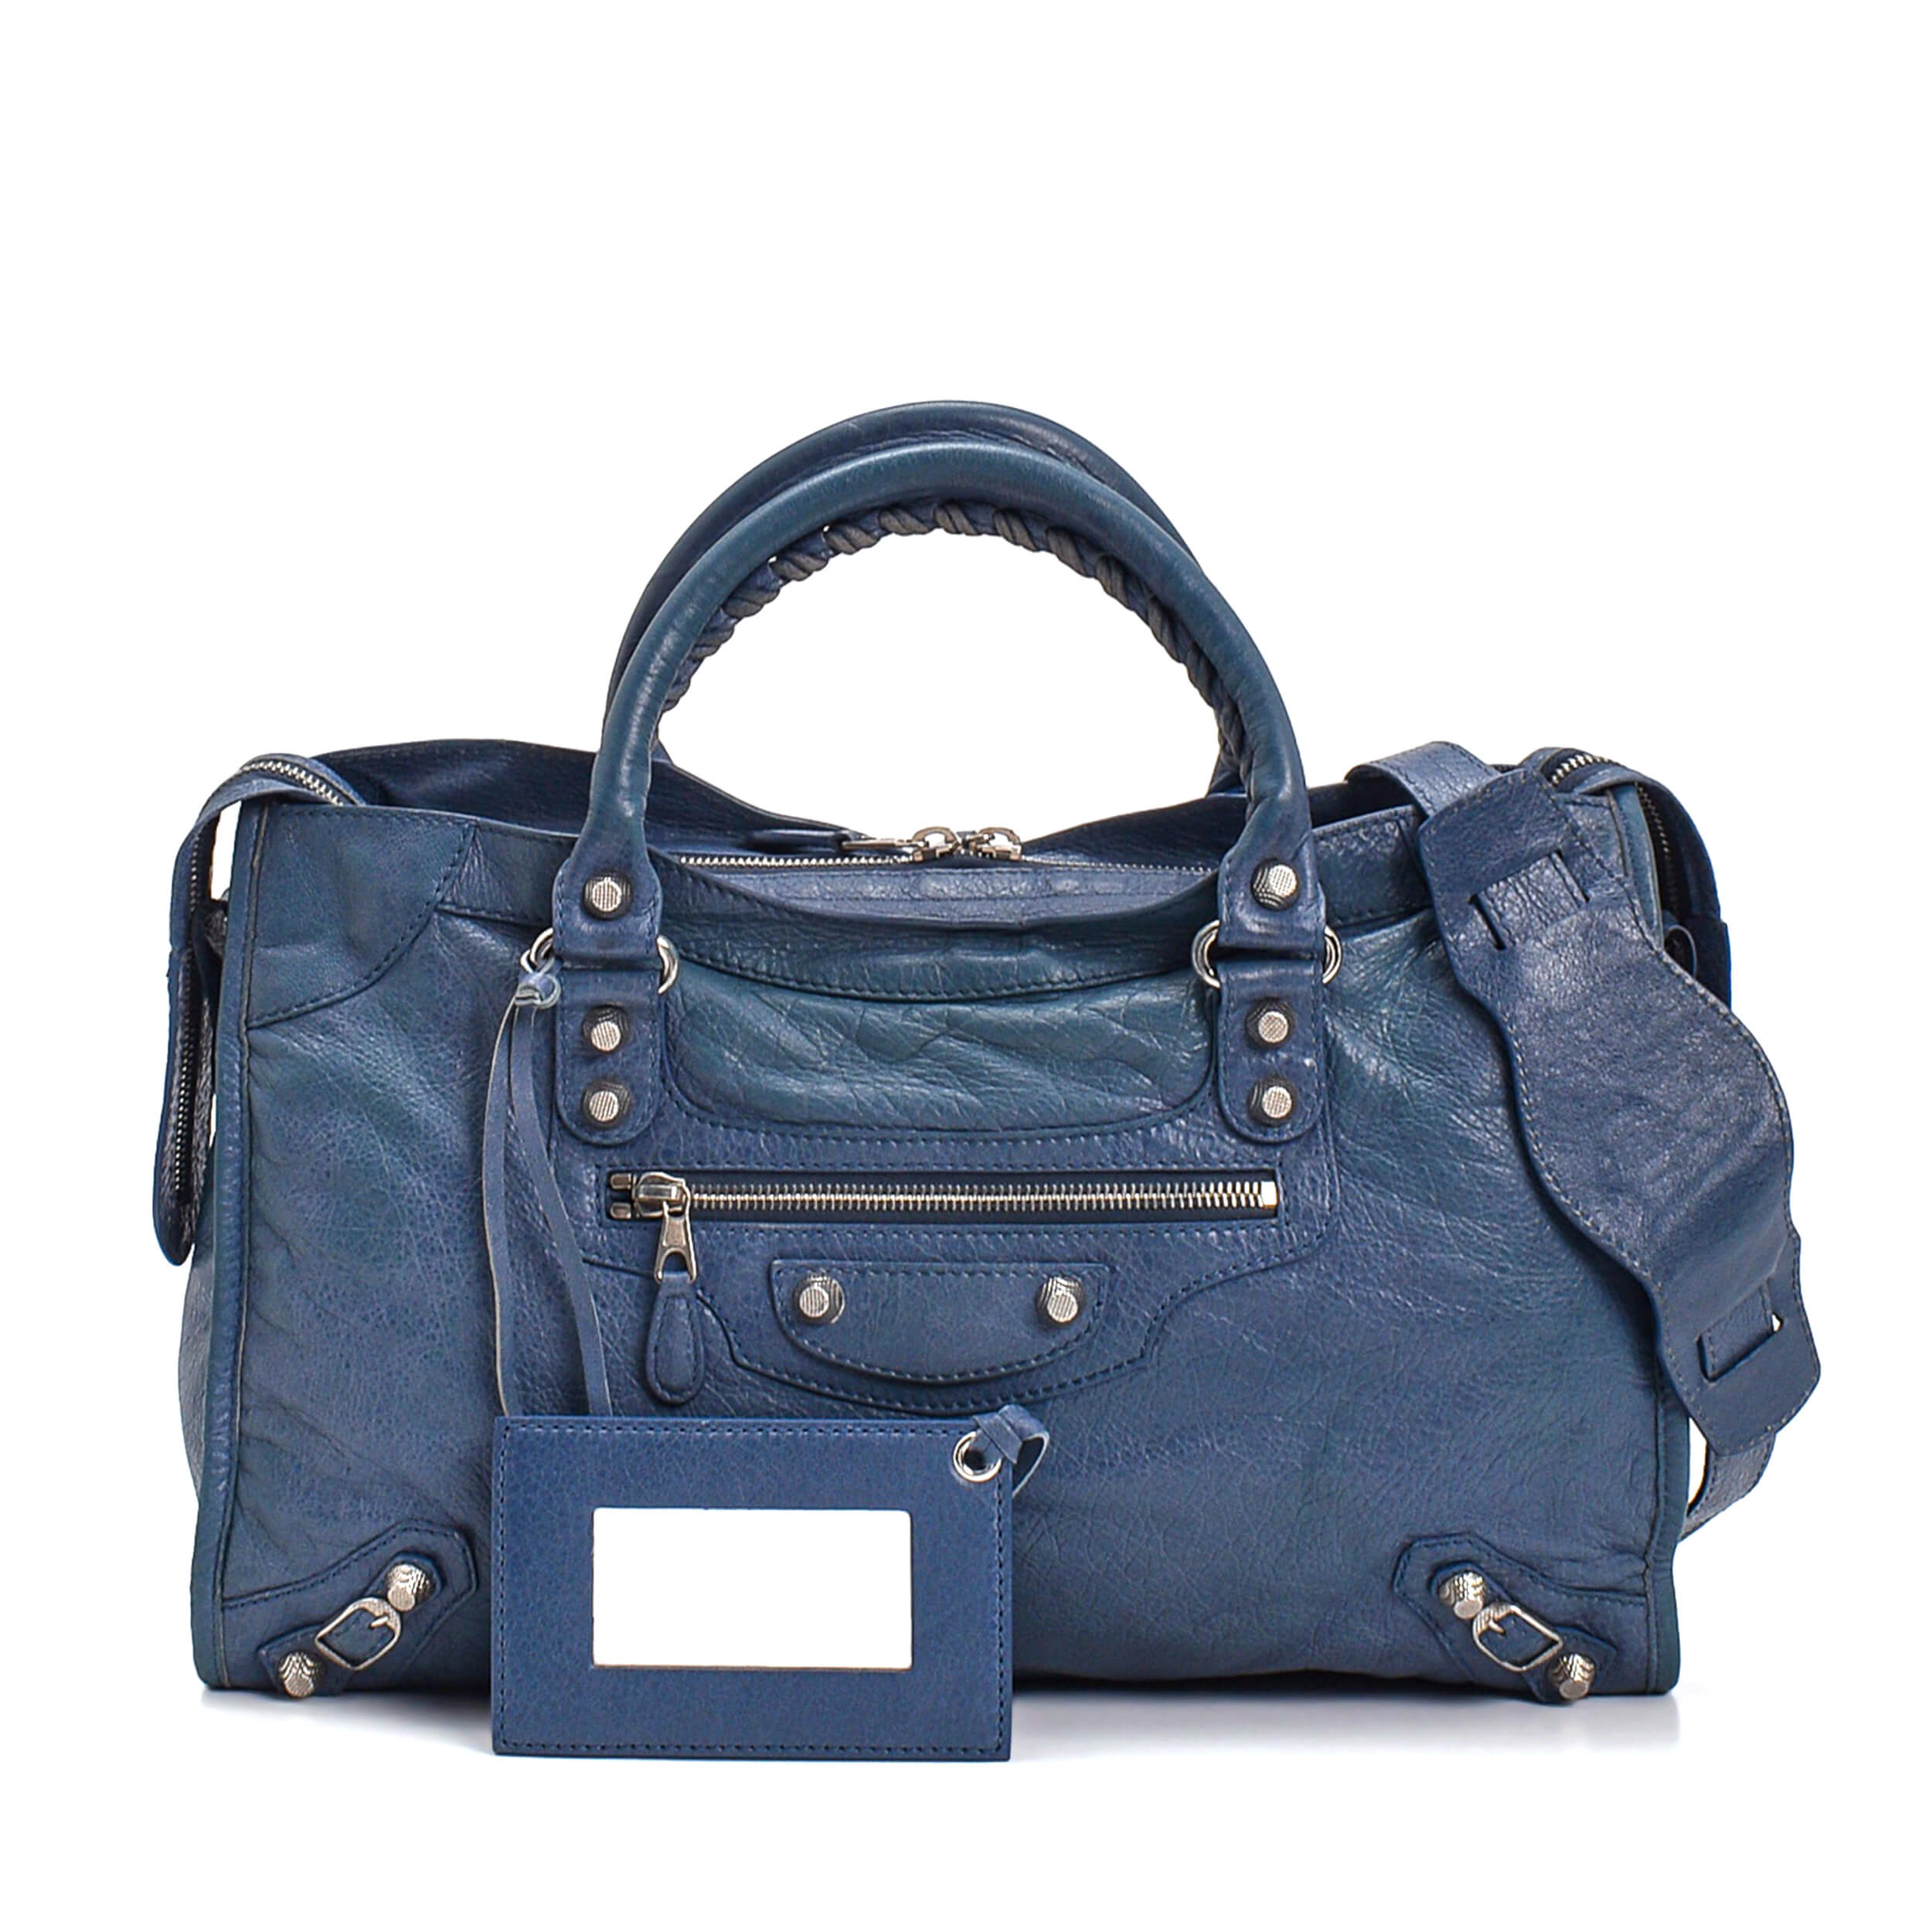 Balenciaga - Blue Leather Medium City Bag 